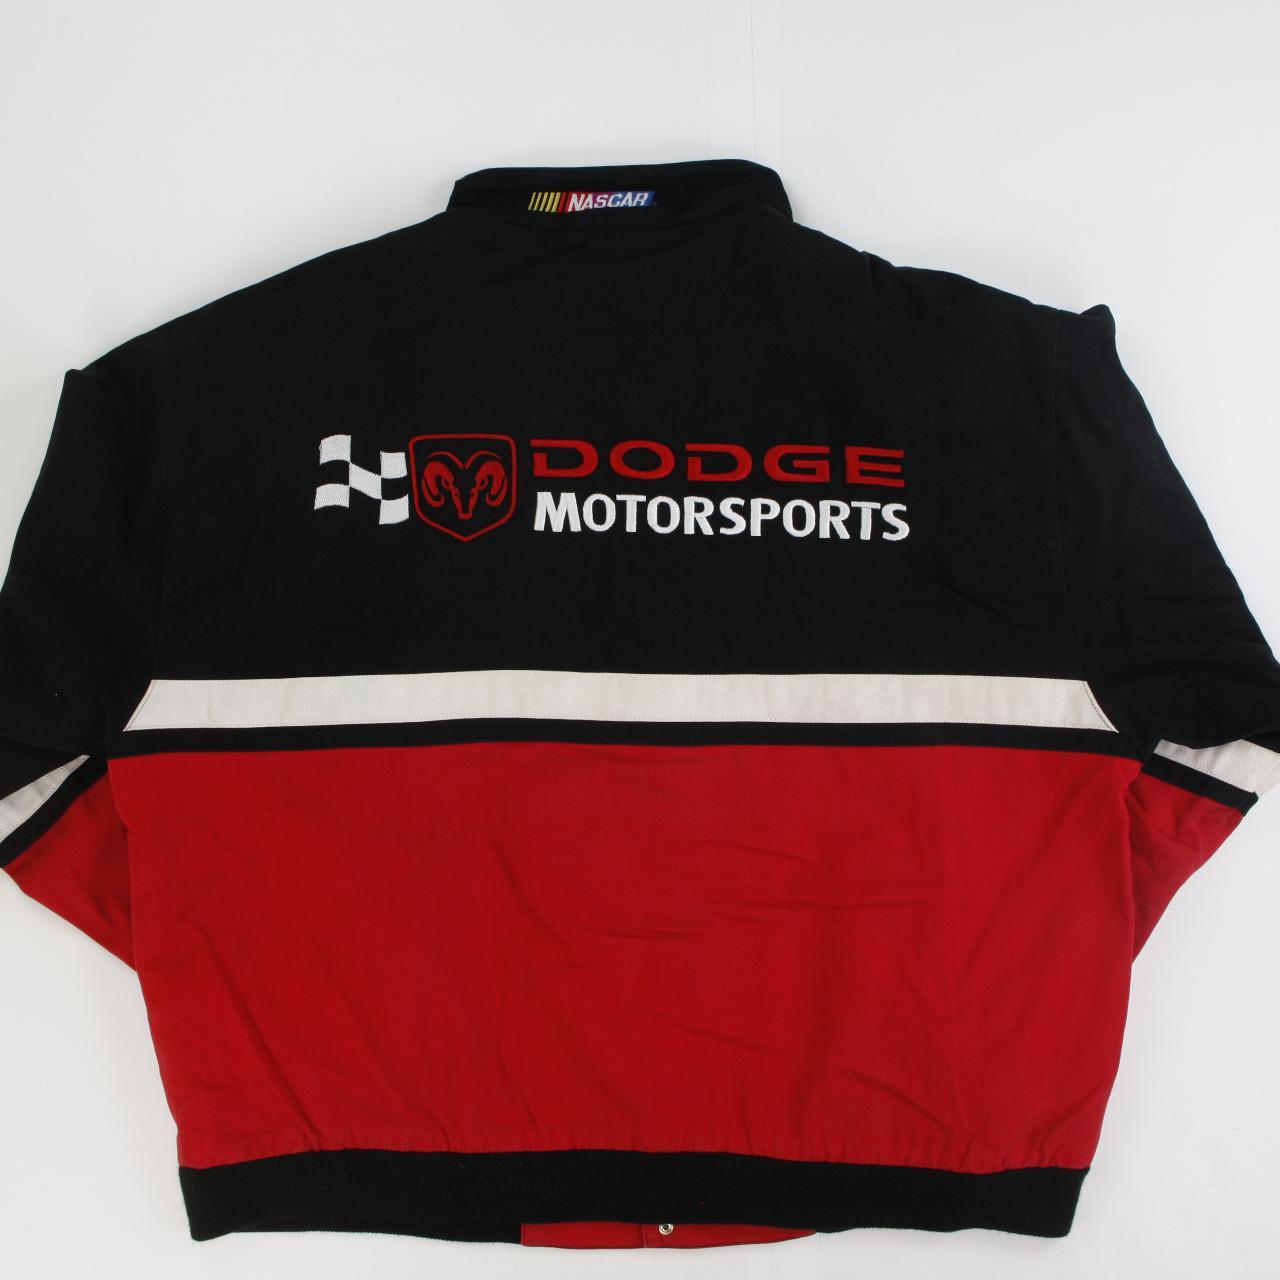 Product Image 4 - Racing Jacket.

Vintage Motorsport Jacket. Driving